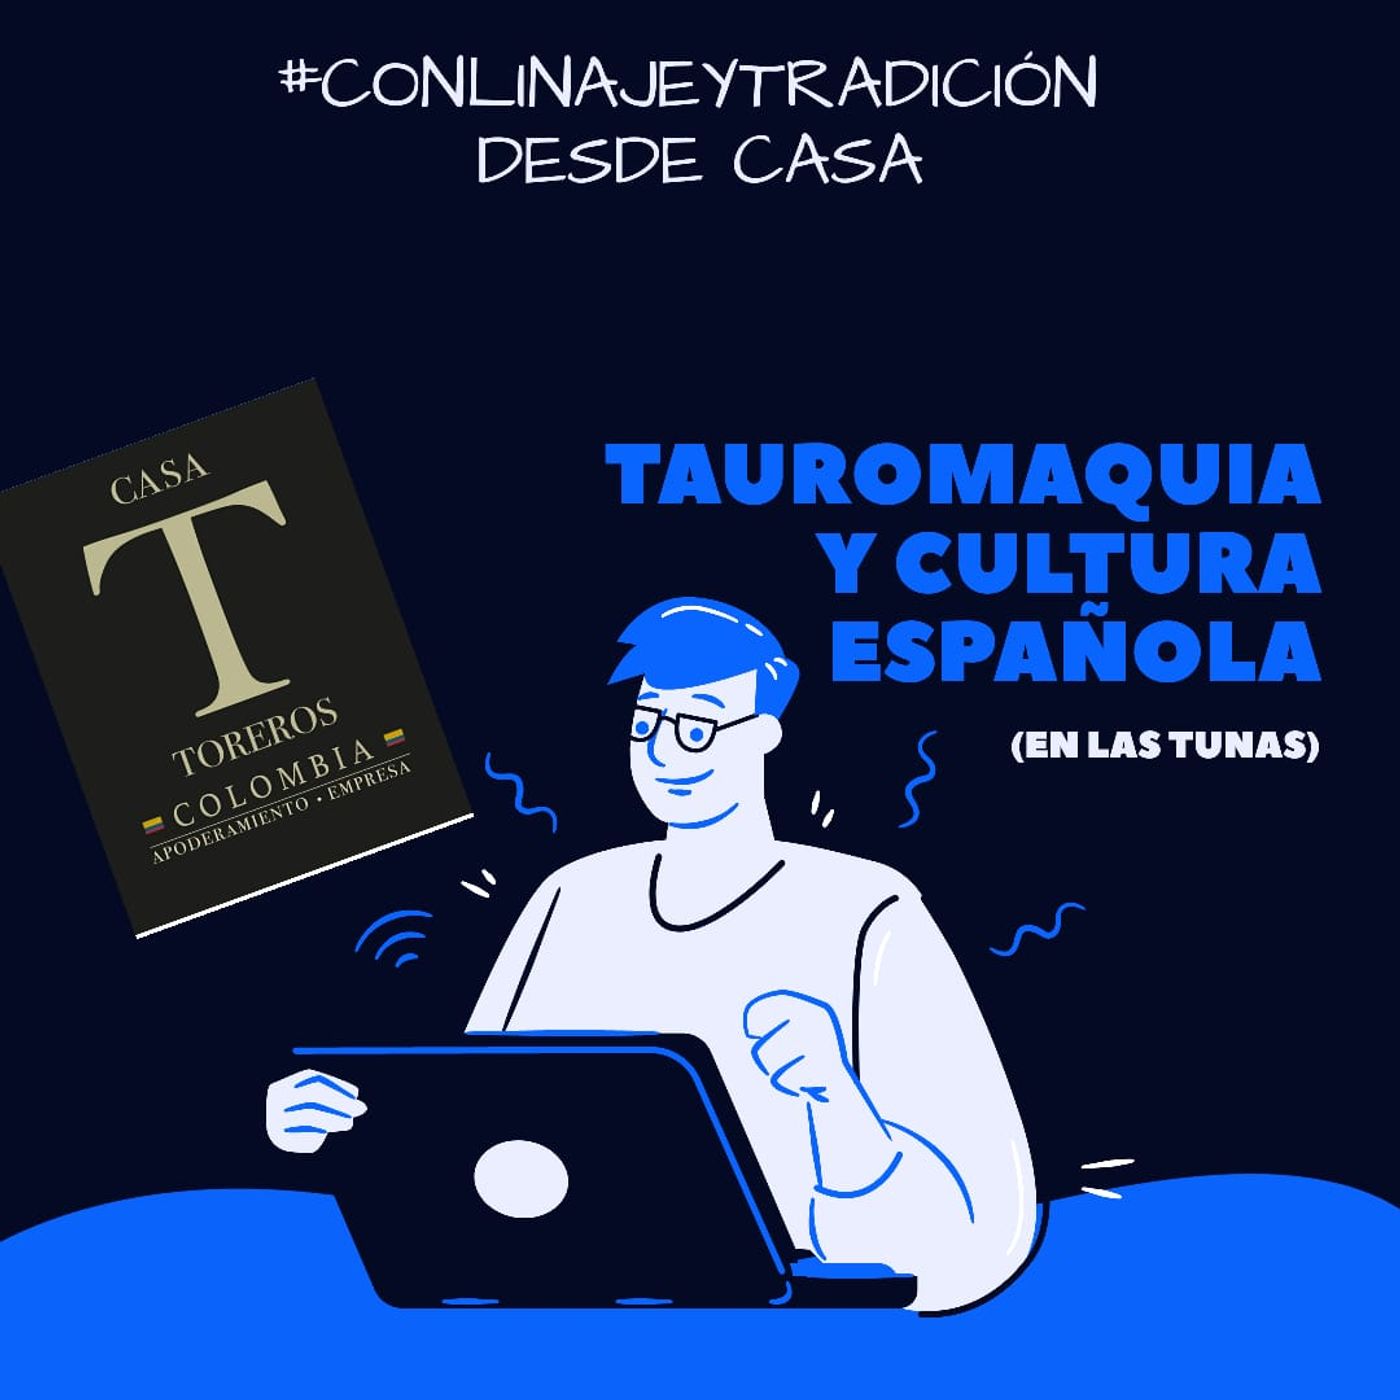 Tauromaquia y cultura española